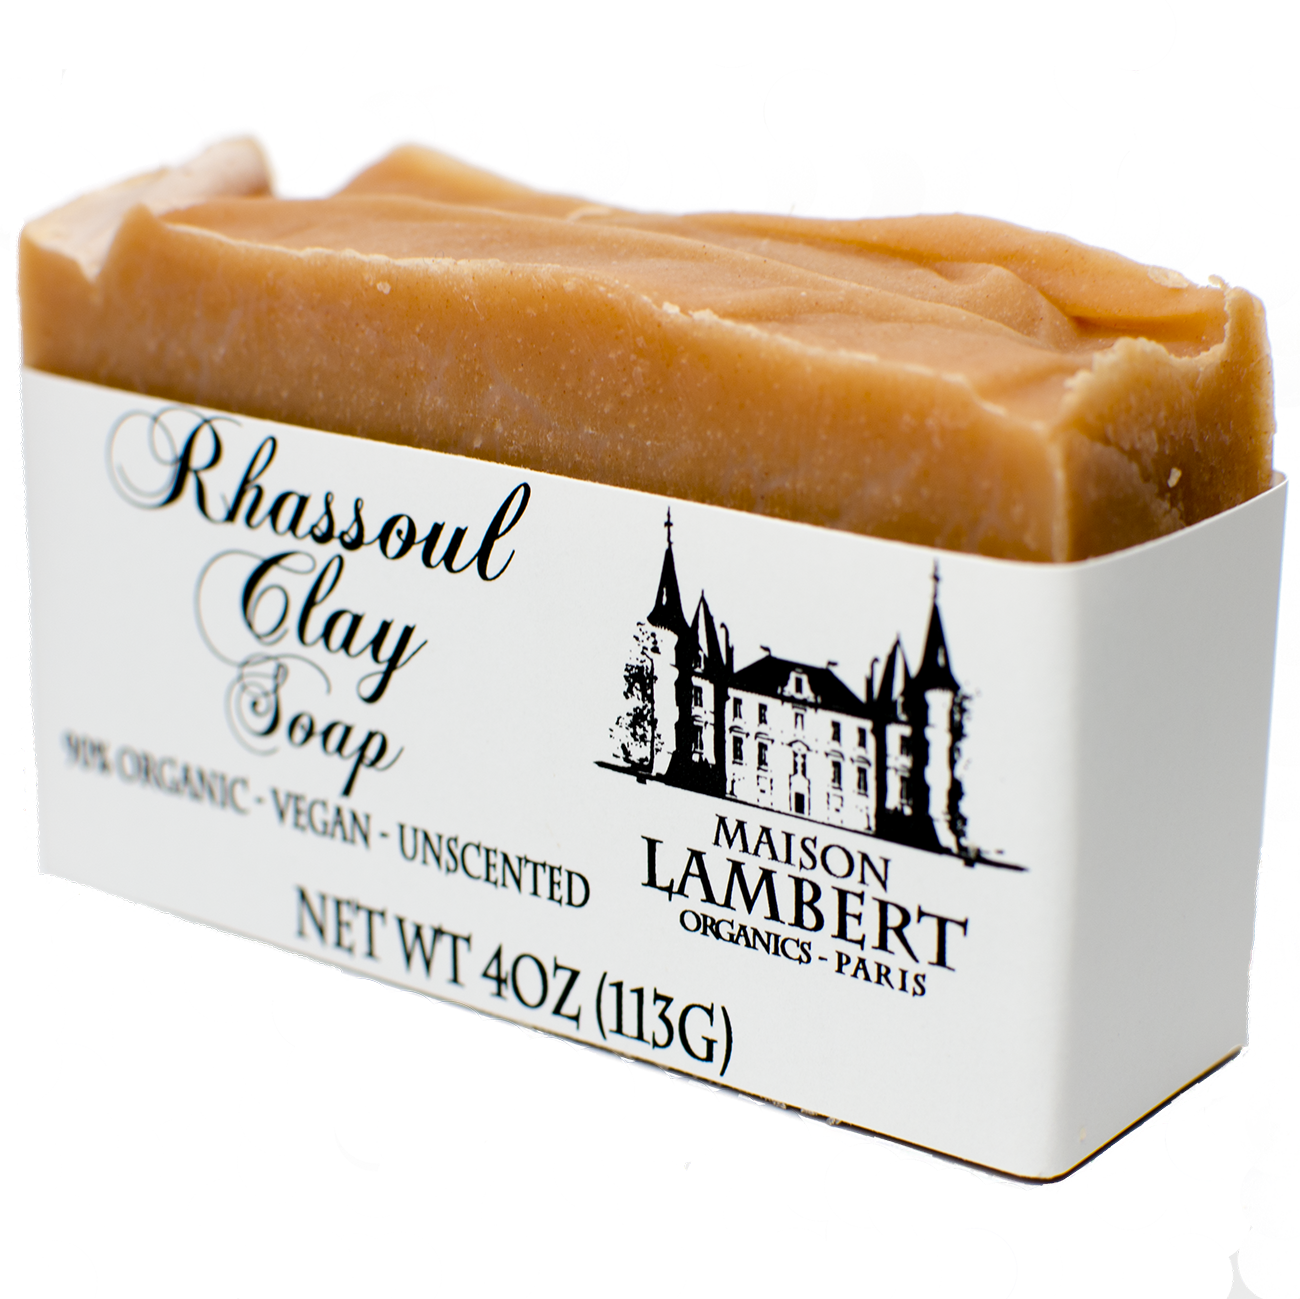 Soap - Organic Rhassoul Clay Soap - Handmade - Vegan - Clay - Unscented